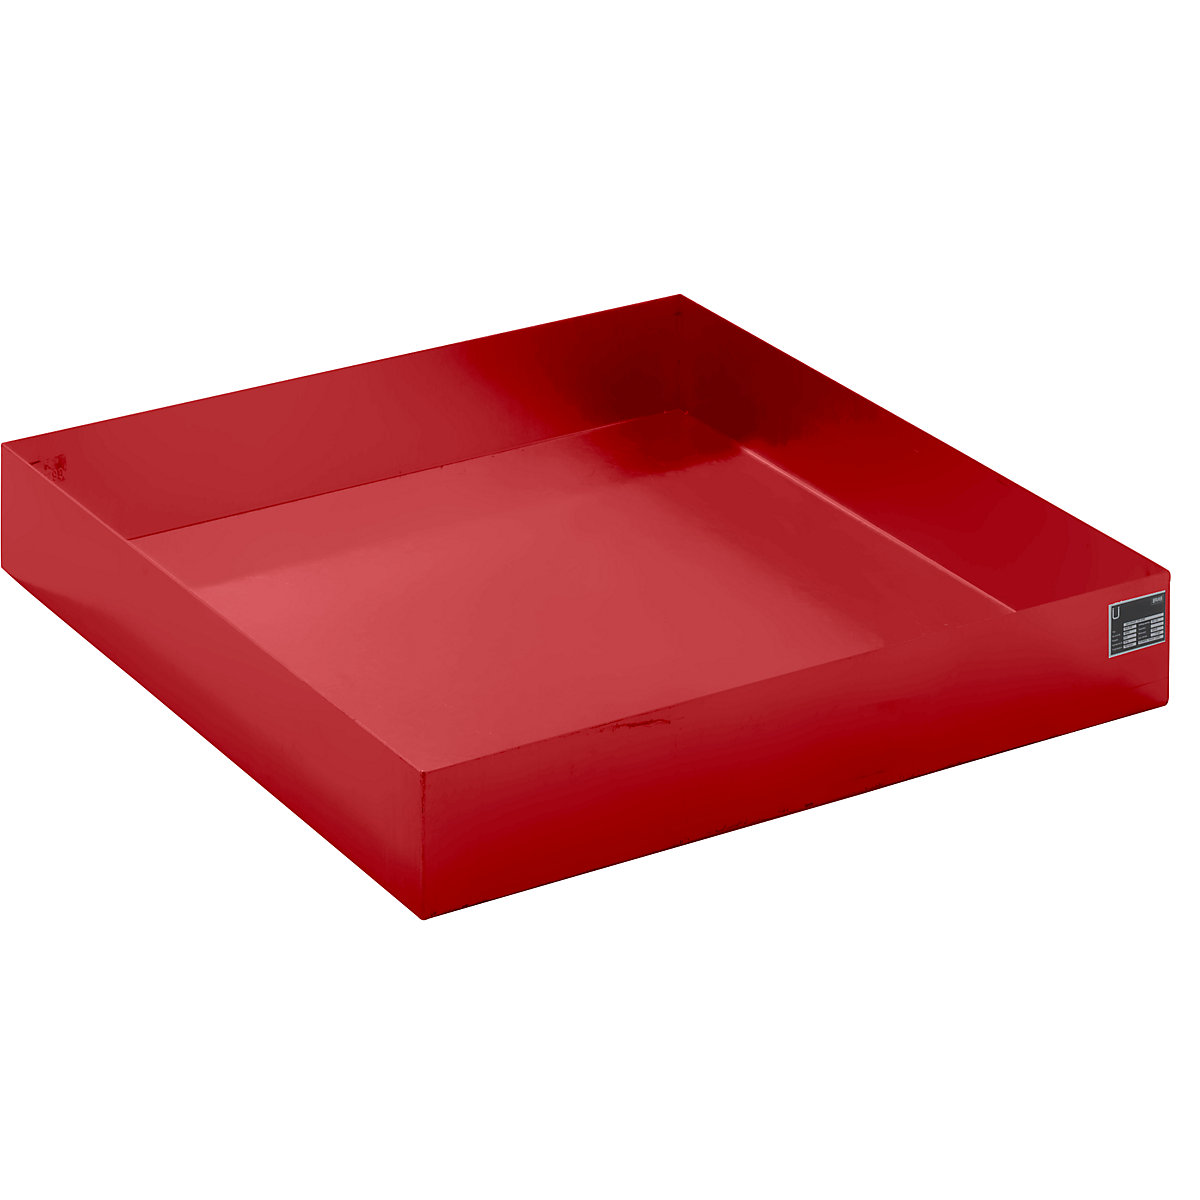 EUROKRAFTbasic – Pallet sump tray, LxWxH 1200 x 1200 x 185 mm, red RAL 3000